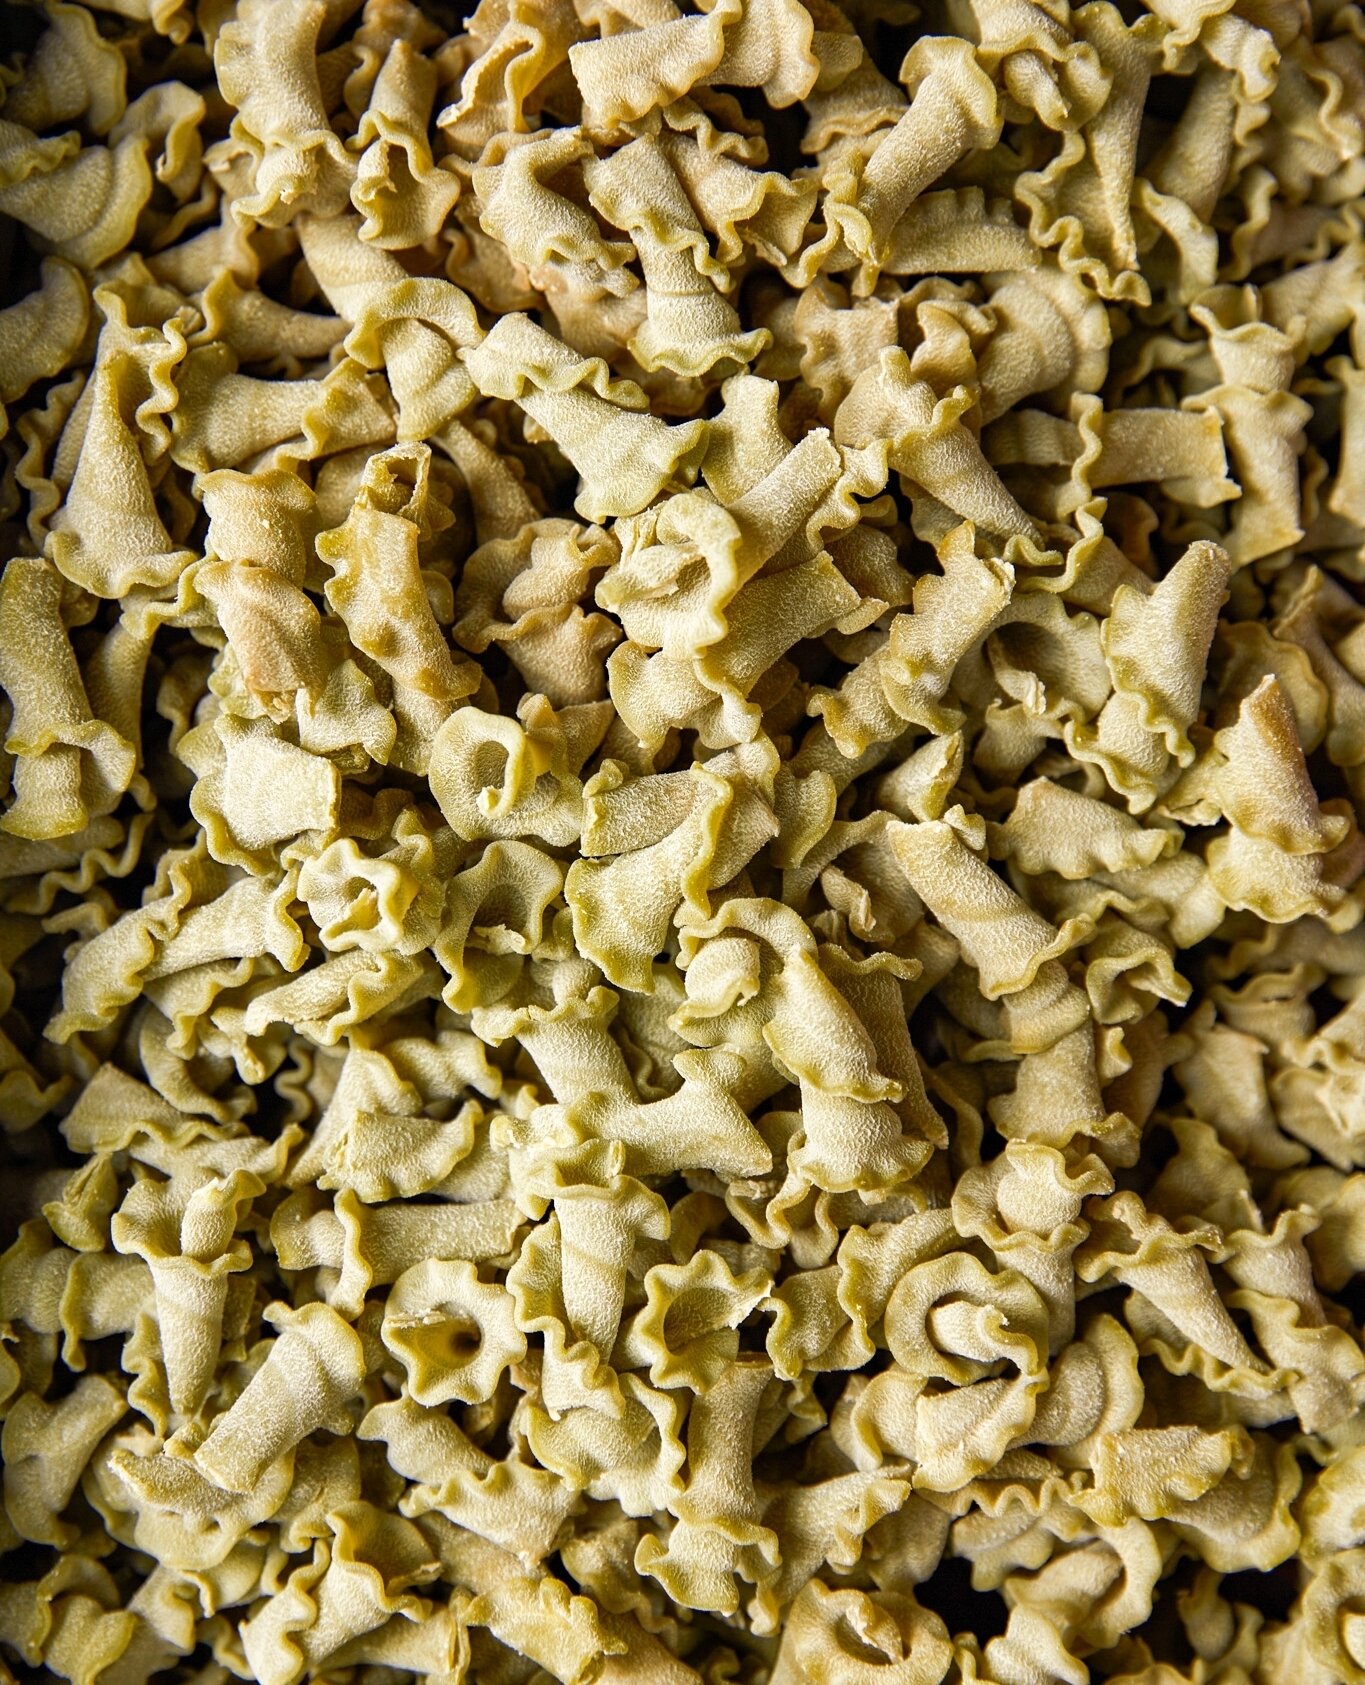 We dream in shapes of pasta. Tell us your favorite type in the comments!⁠
⁠
⁠
⁠
⁠
#eatpiatti #piatti #italianrestaurant #pasta #italiancuisine #freshpasta #pastalover #pastapasta #italianfood #visitcalifornia #californiarestaurants #visitsanantonio #